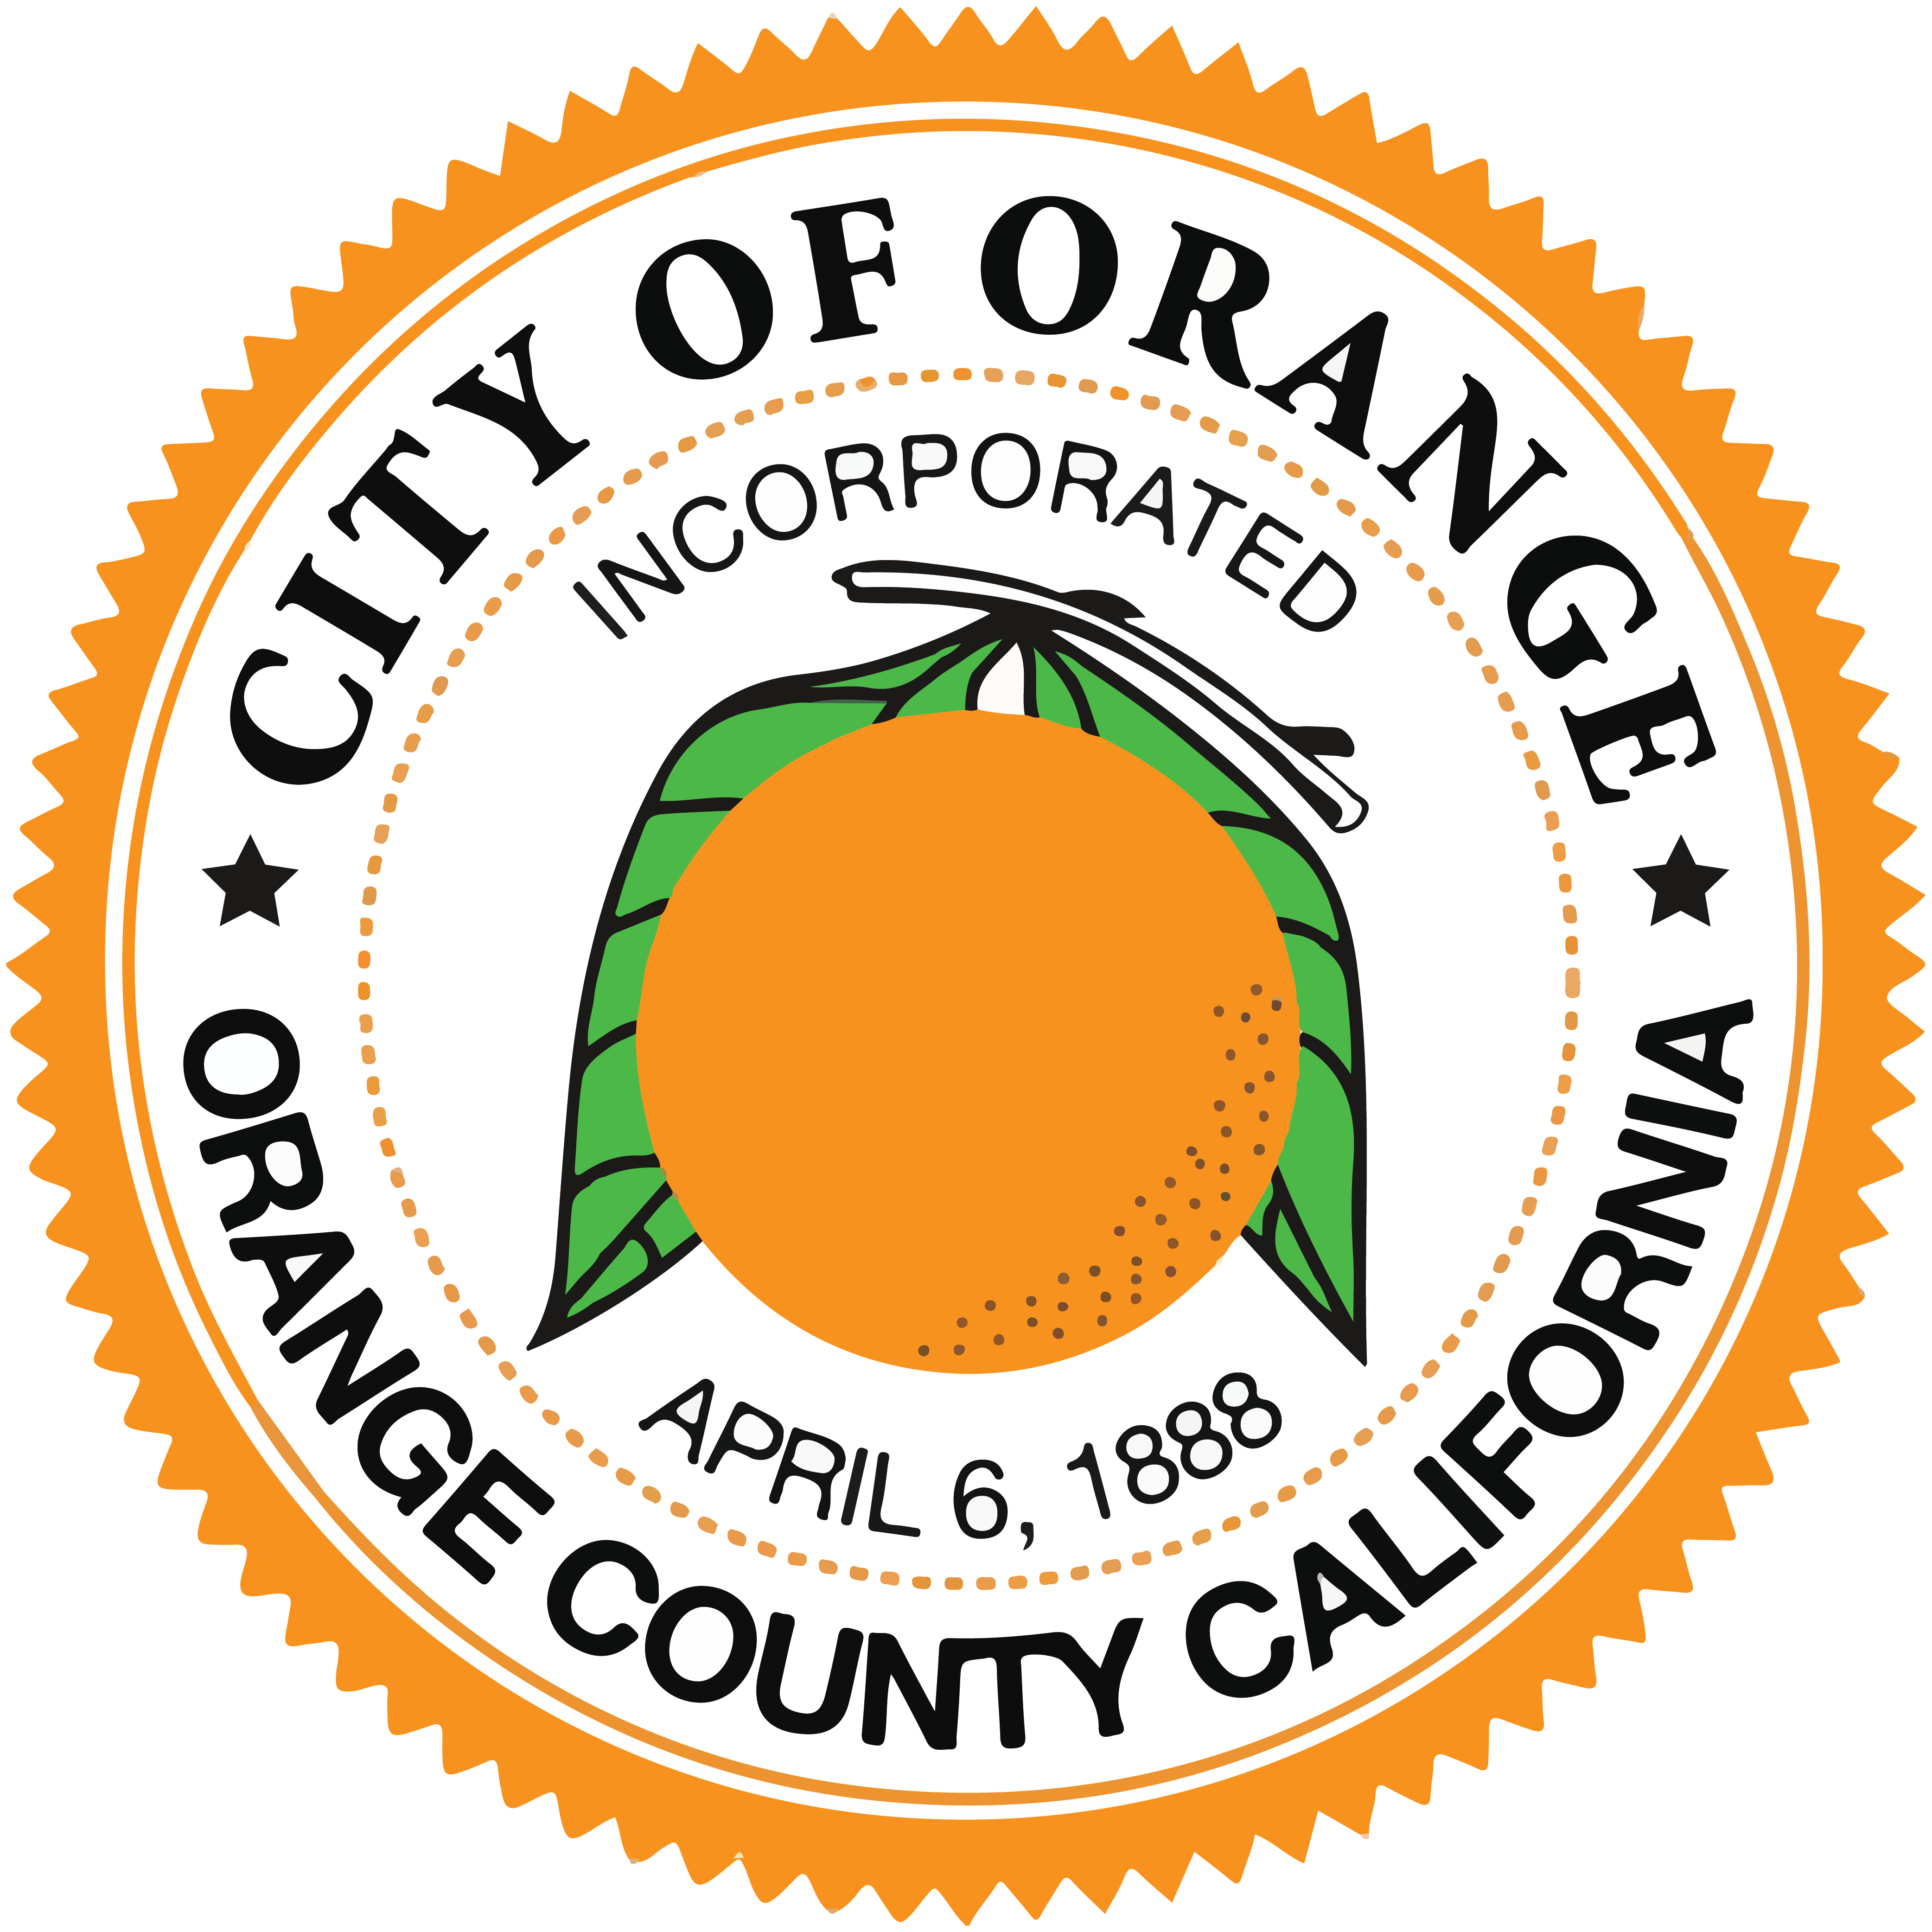 City of Orange Community Services